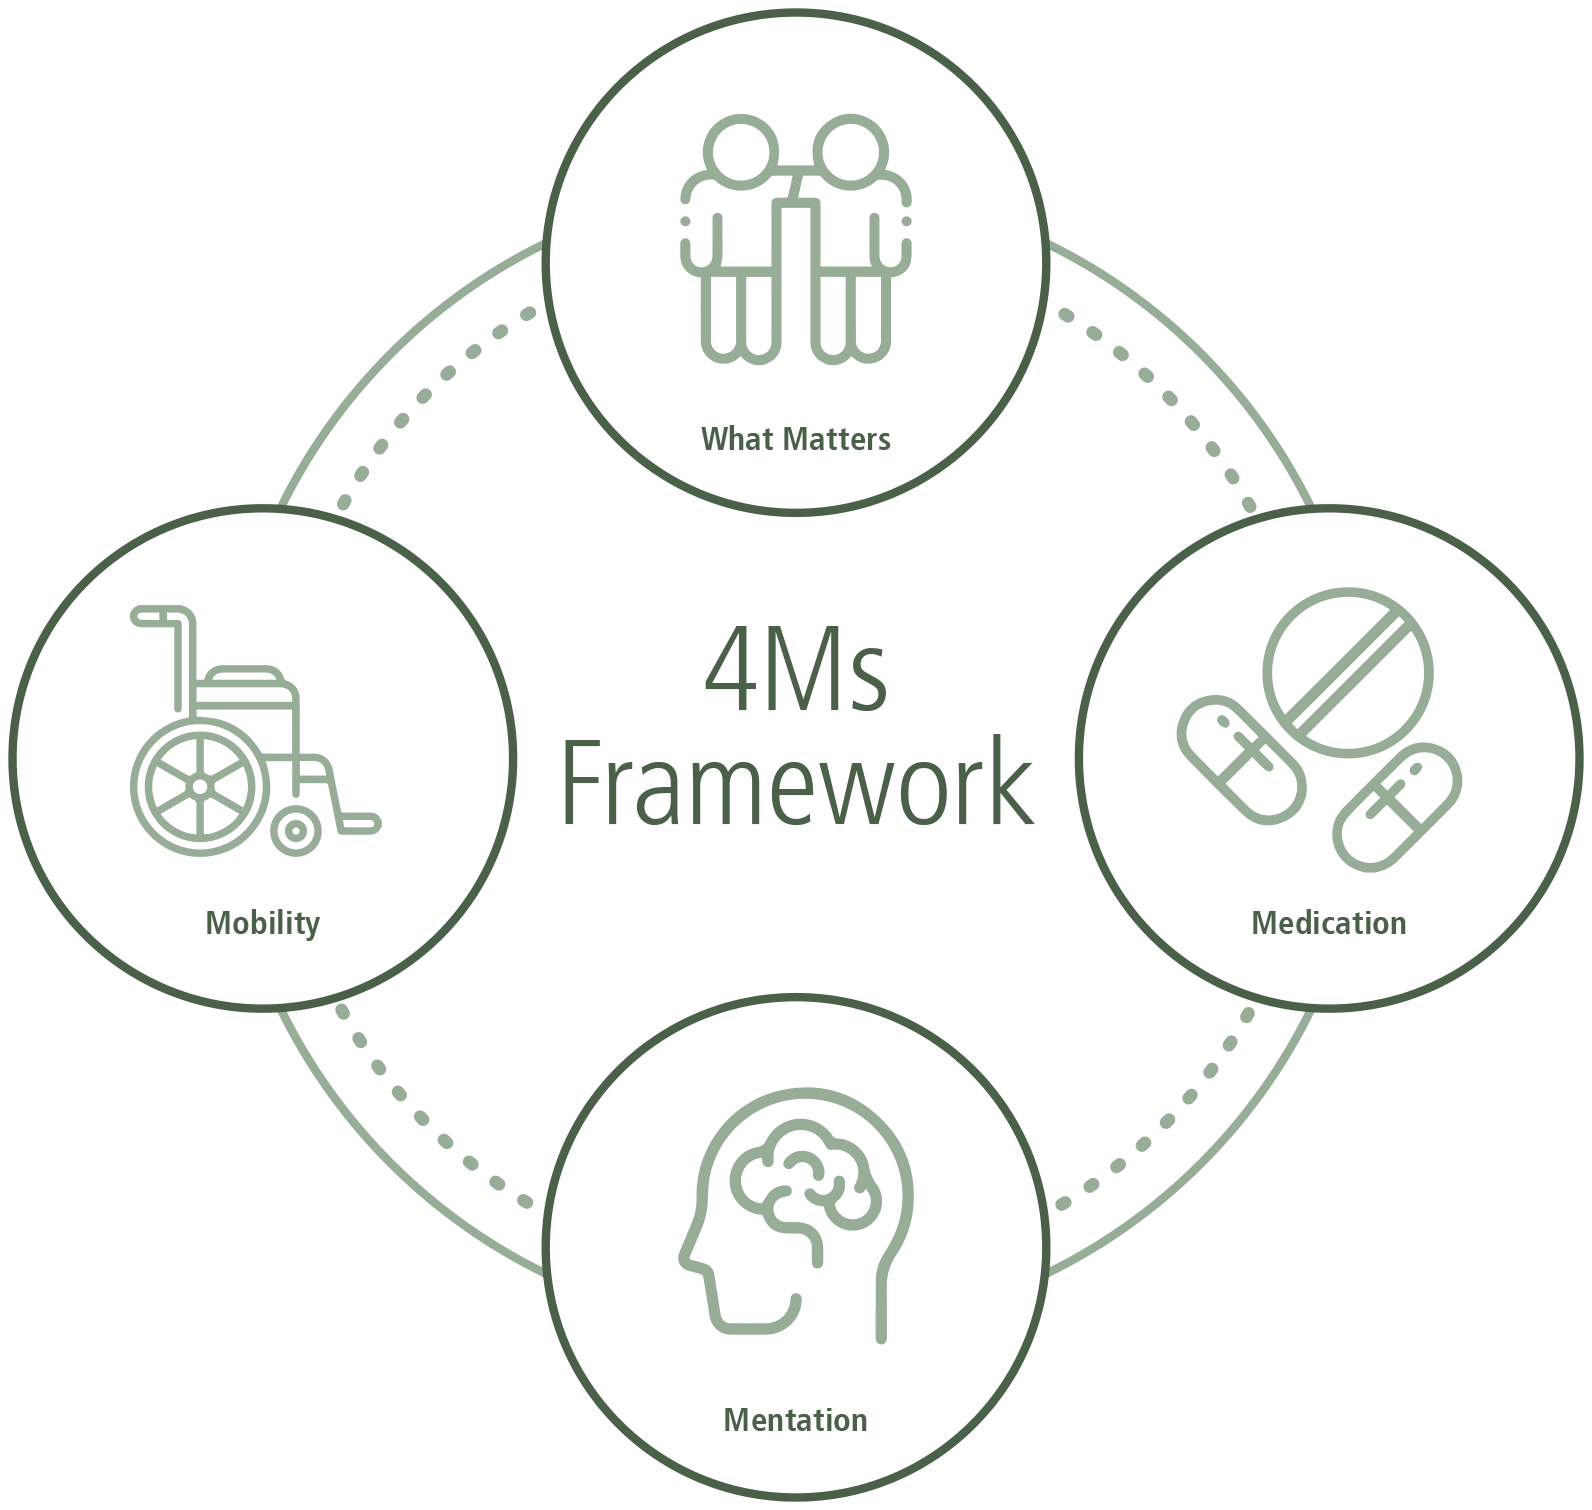 AMs Framework: What Matters, Medication, Mentation, Mobility